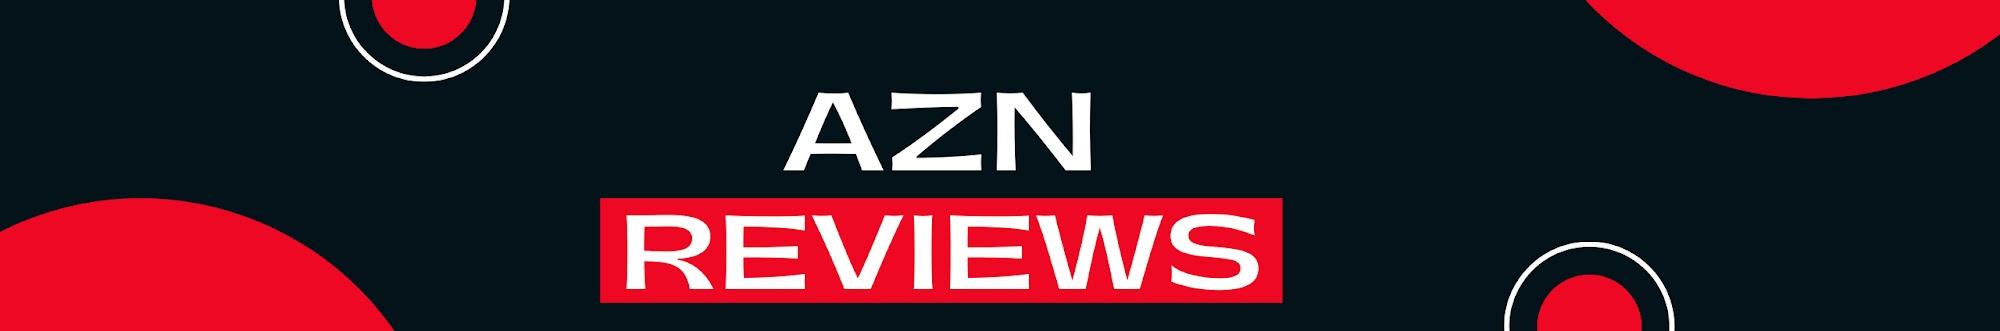 AZN Reviews